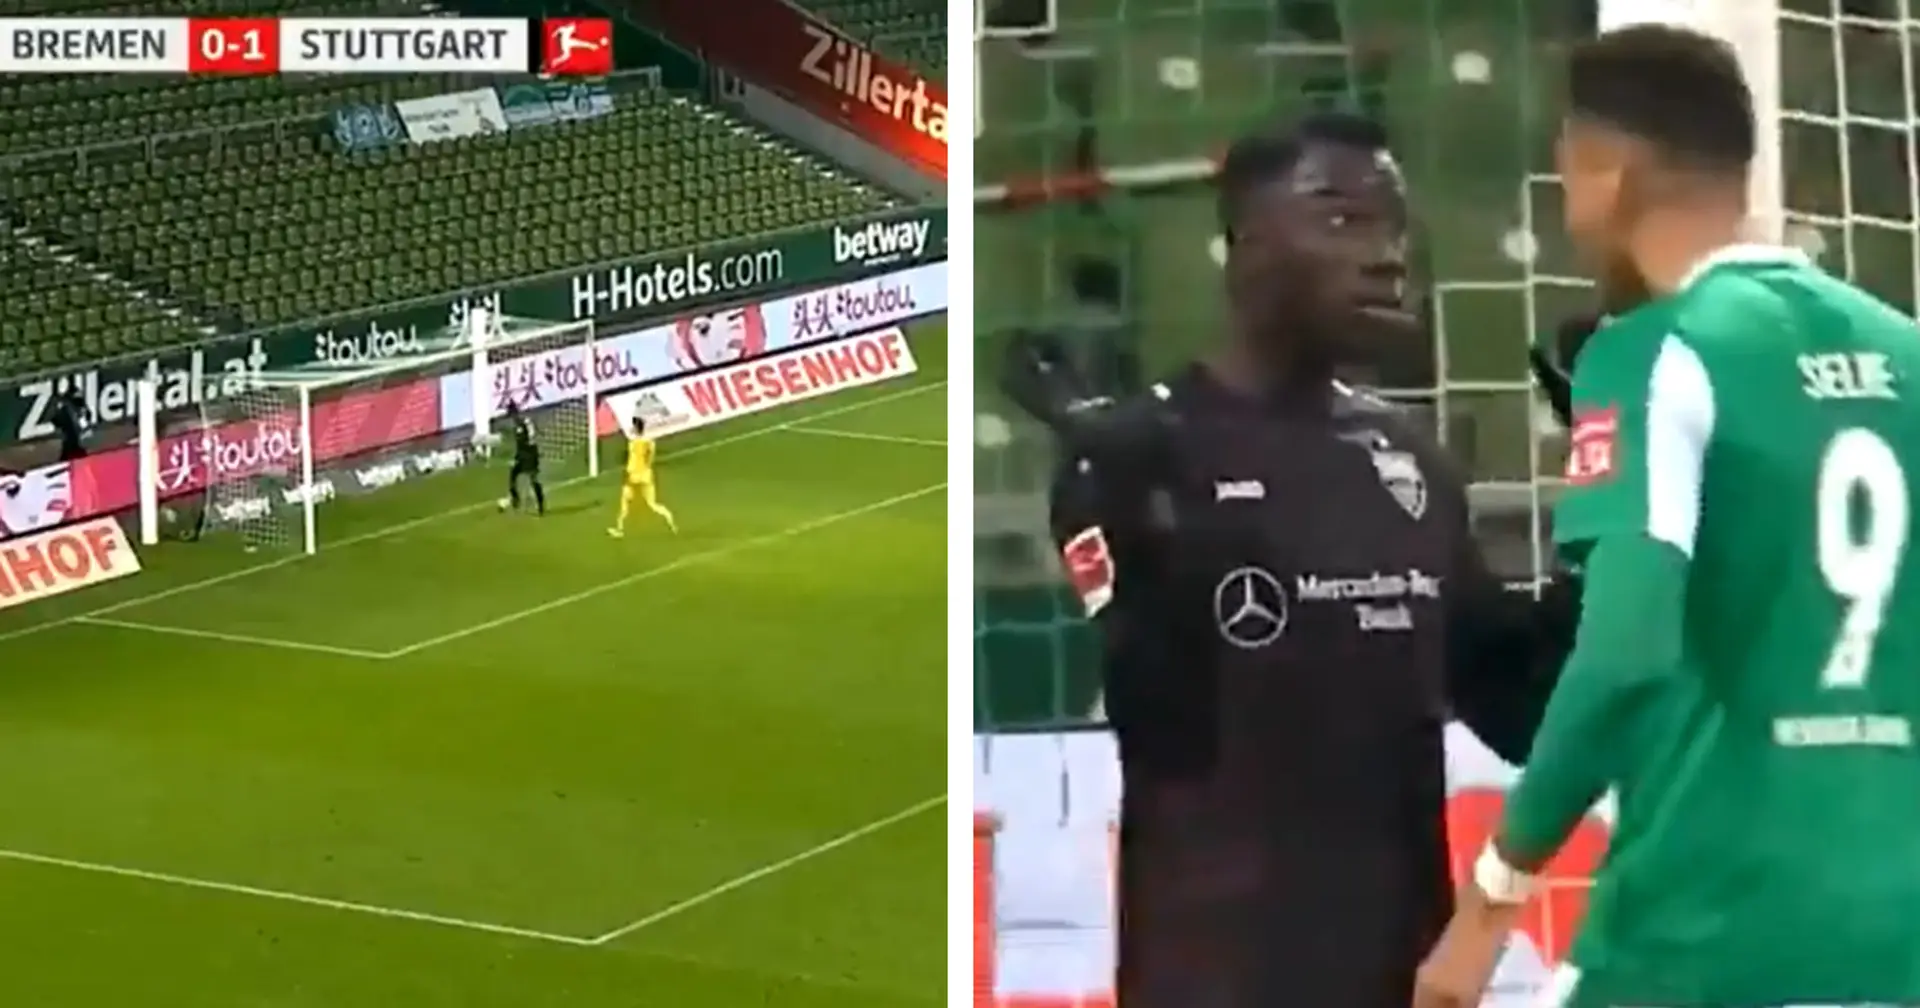 Stuttgart player stands in front of an empty net, pisses off entire Werder team